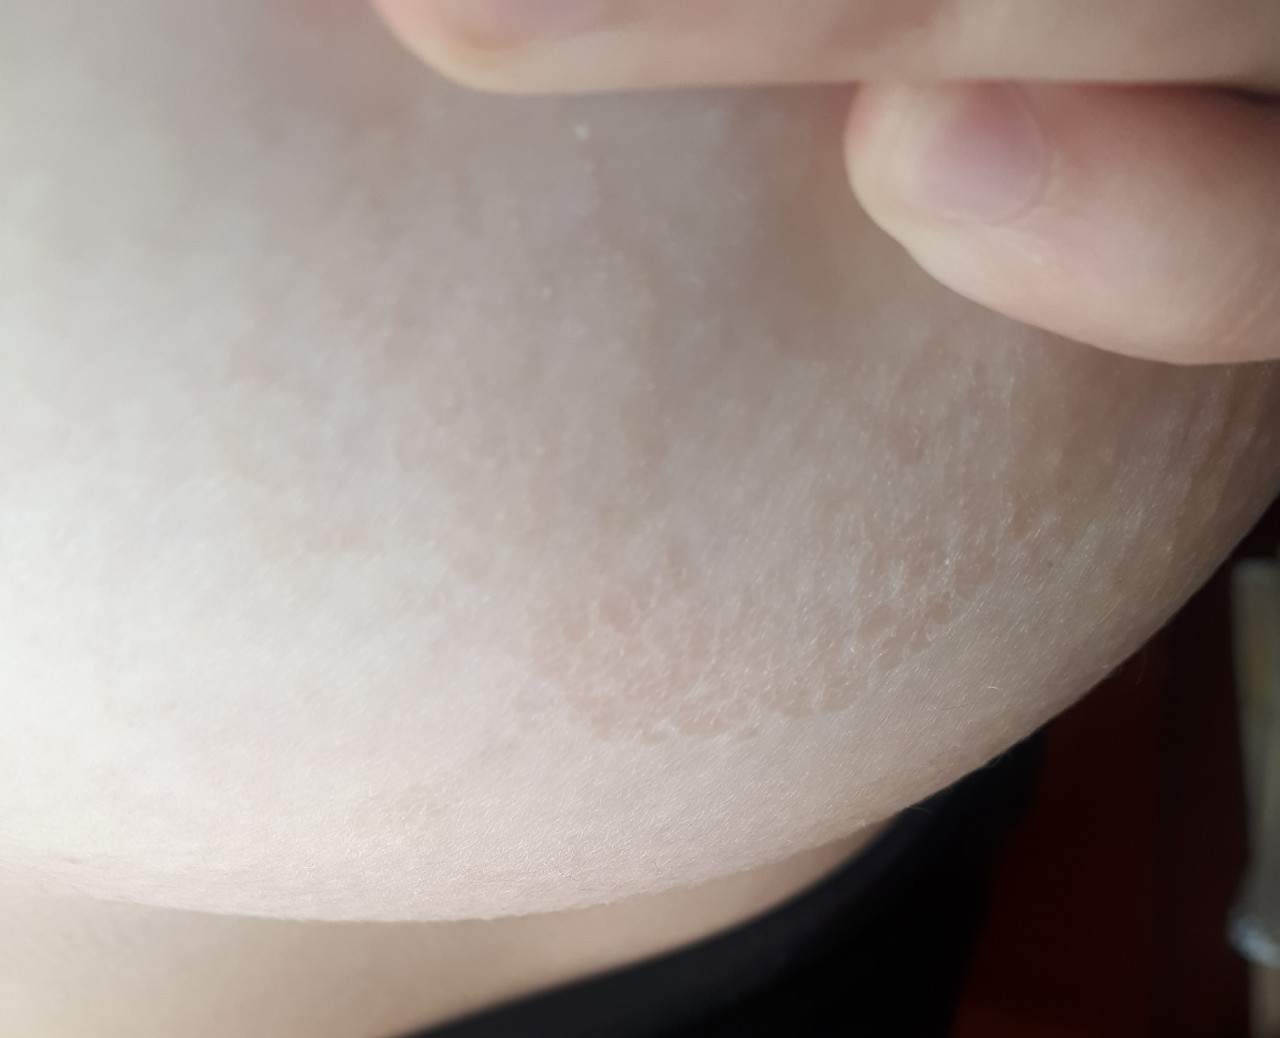 шелушение кожи на груди у мужчин фото 10